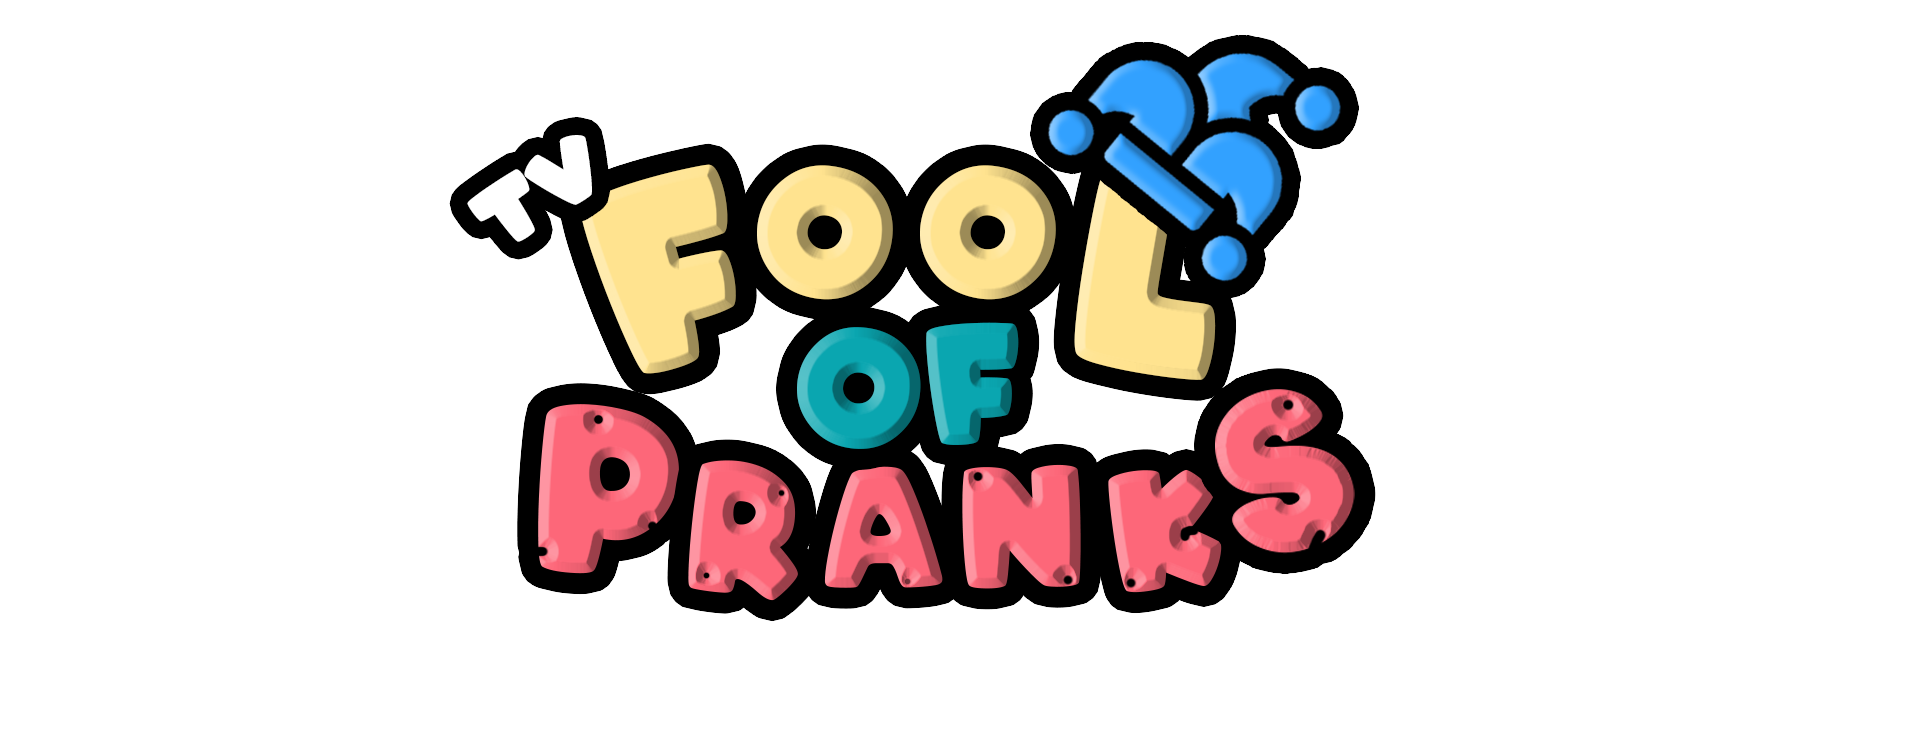 Fool of Pranks